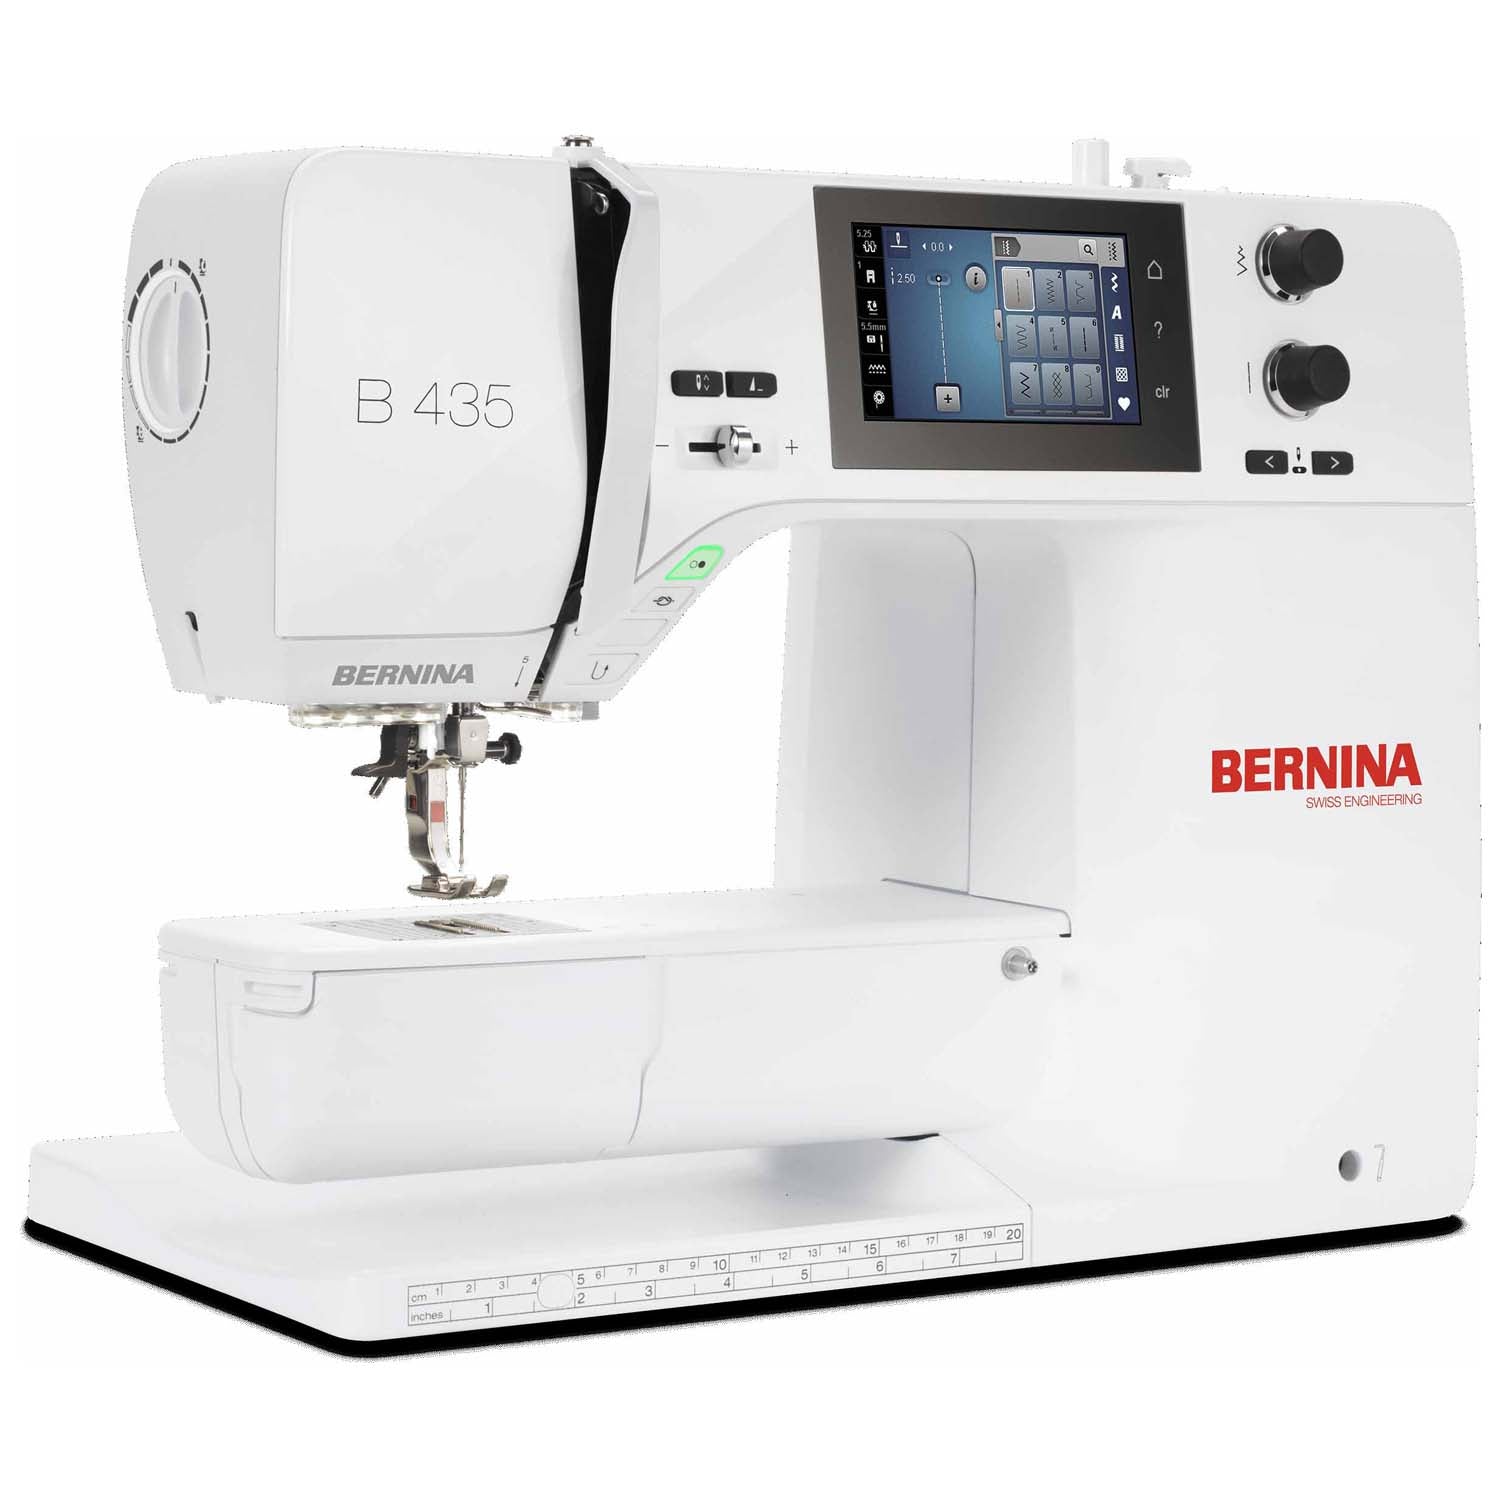 BERNINA 435 Sewing Machine